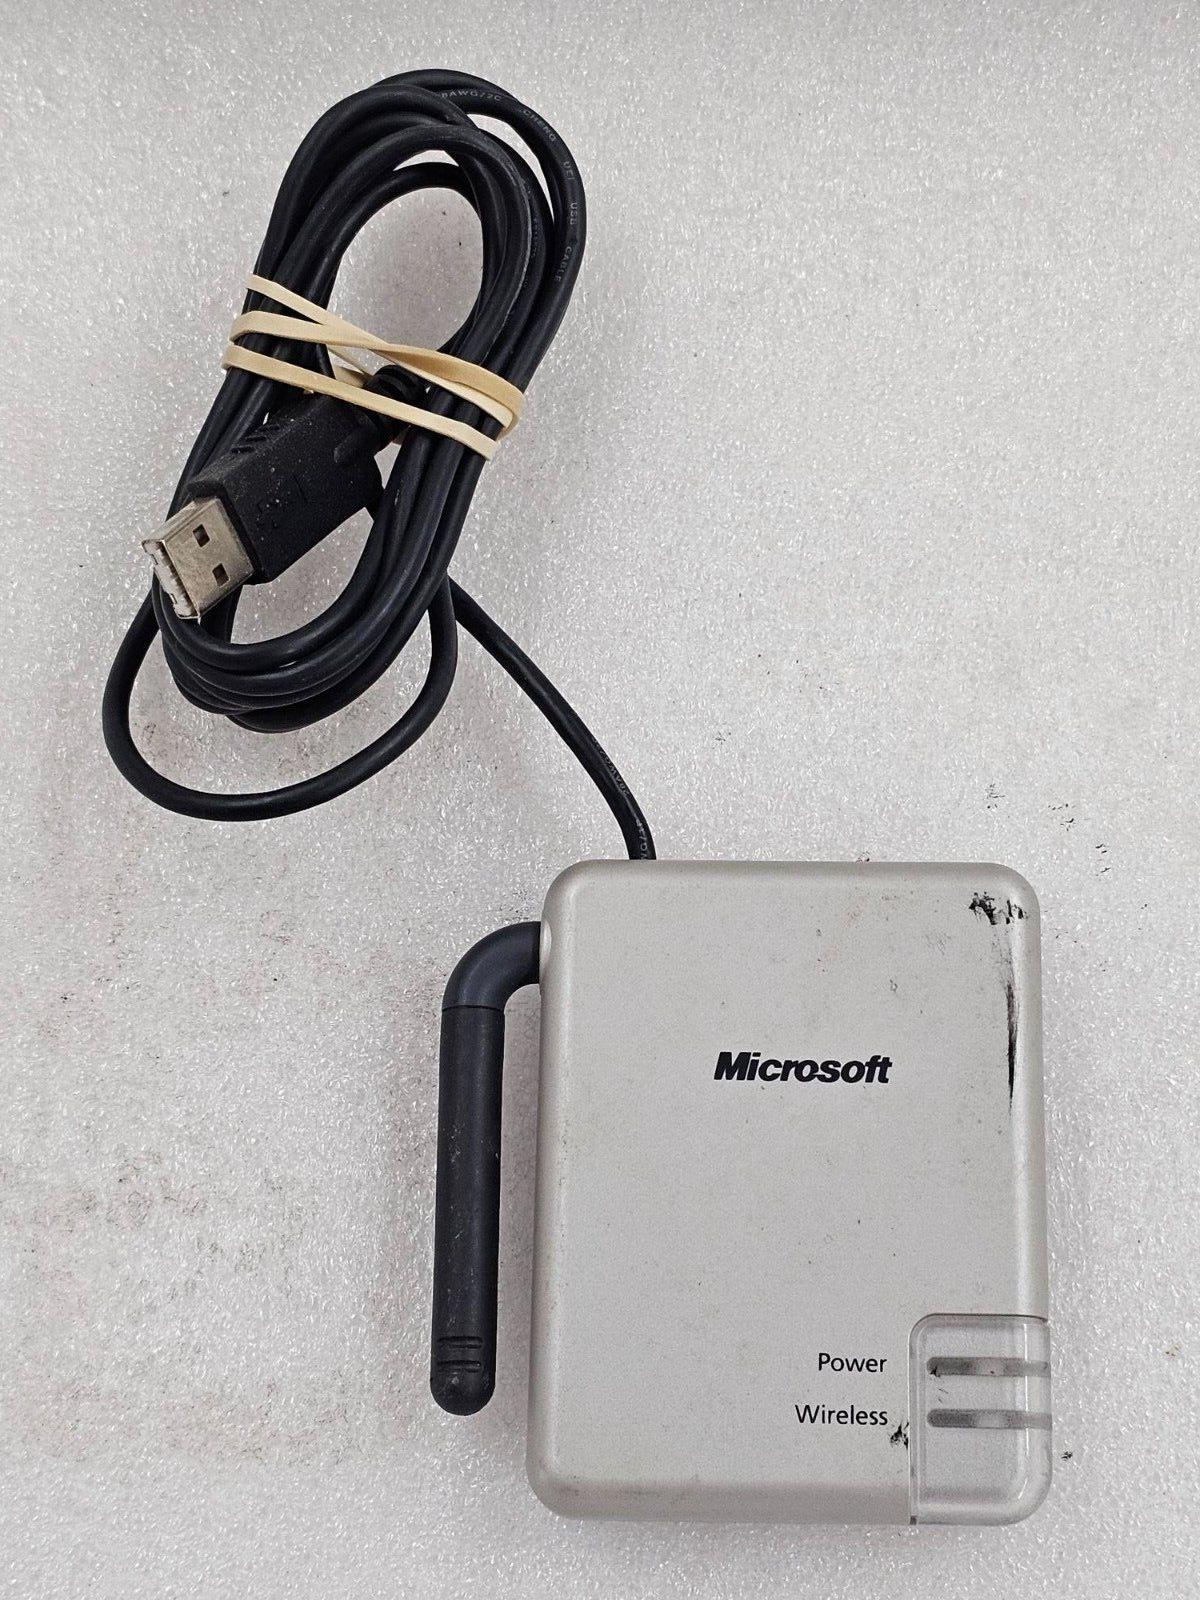 Microsoft MN-510 Wireless USB Adapter